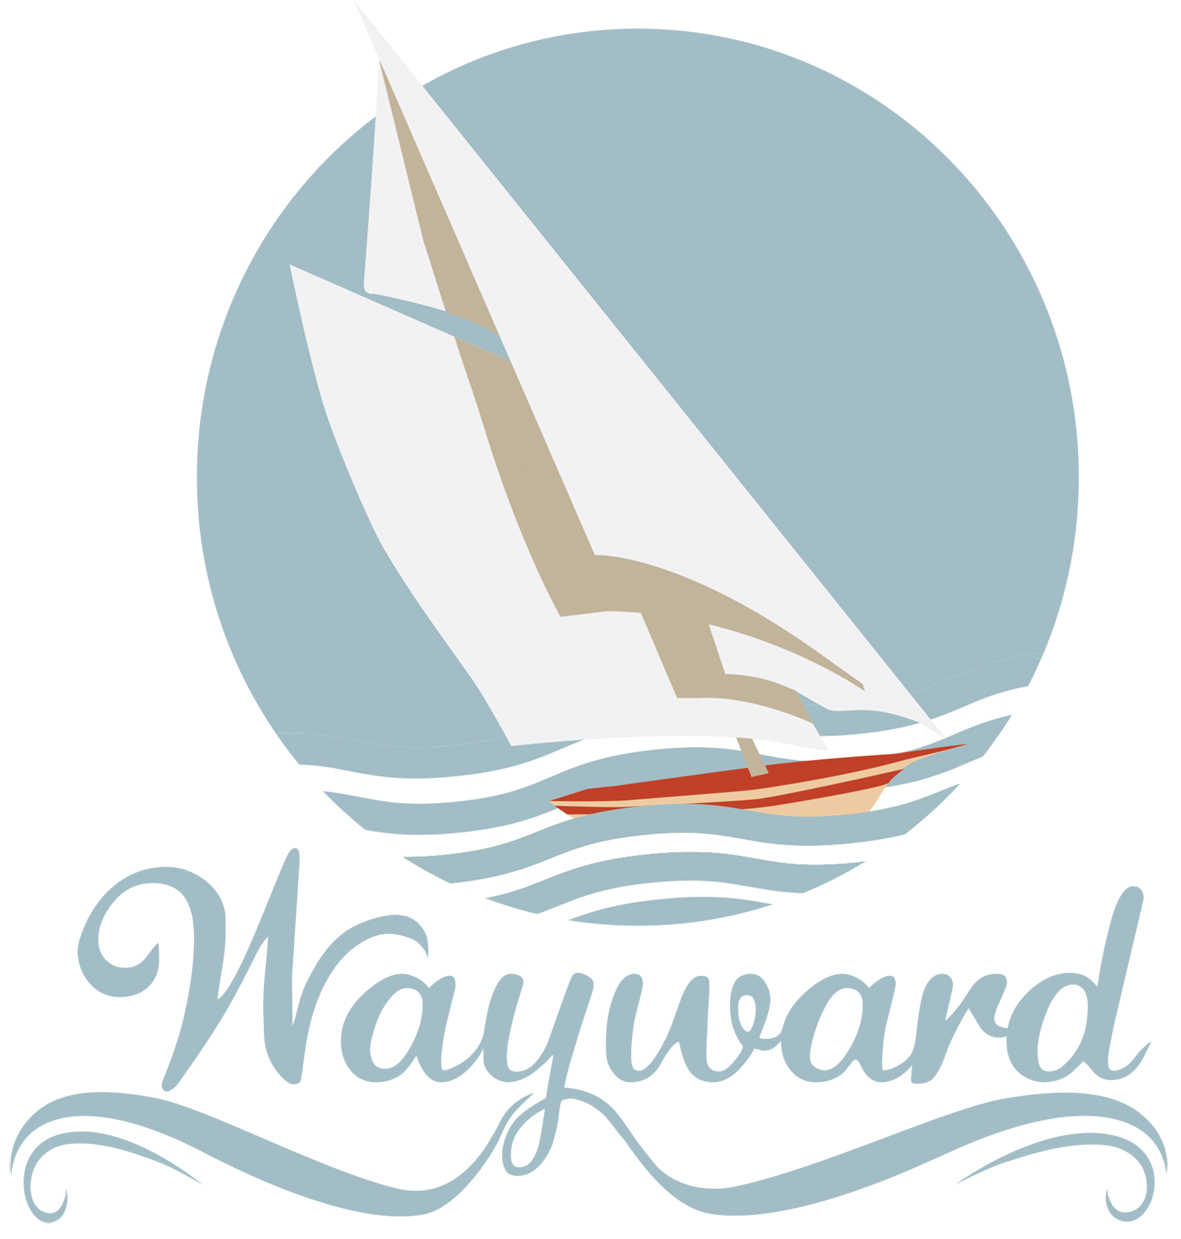 Wayward on Behance